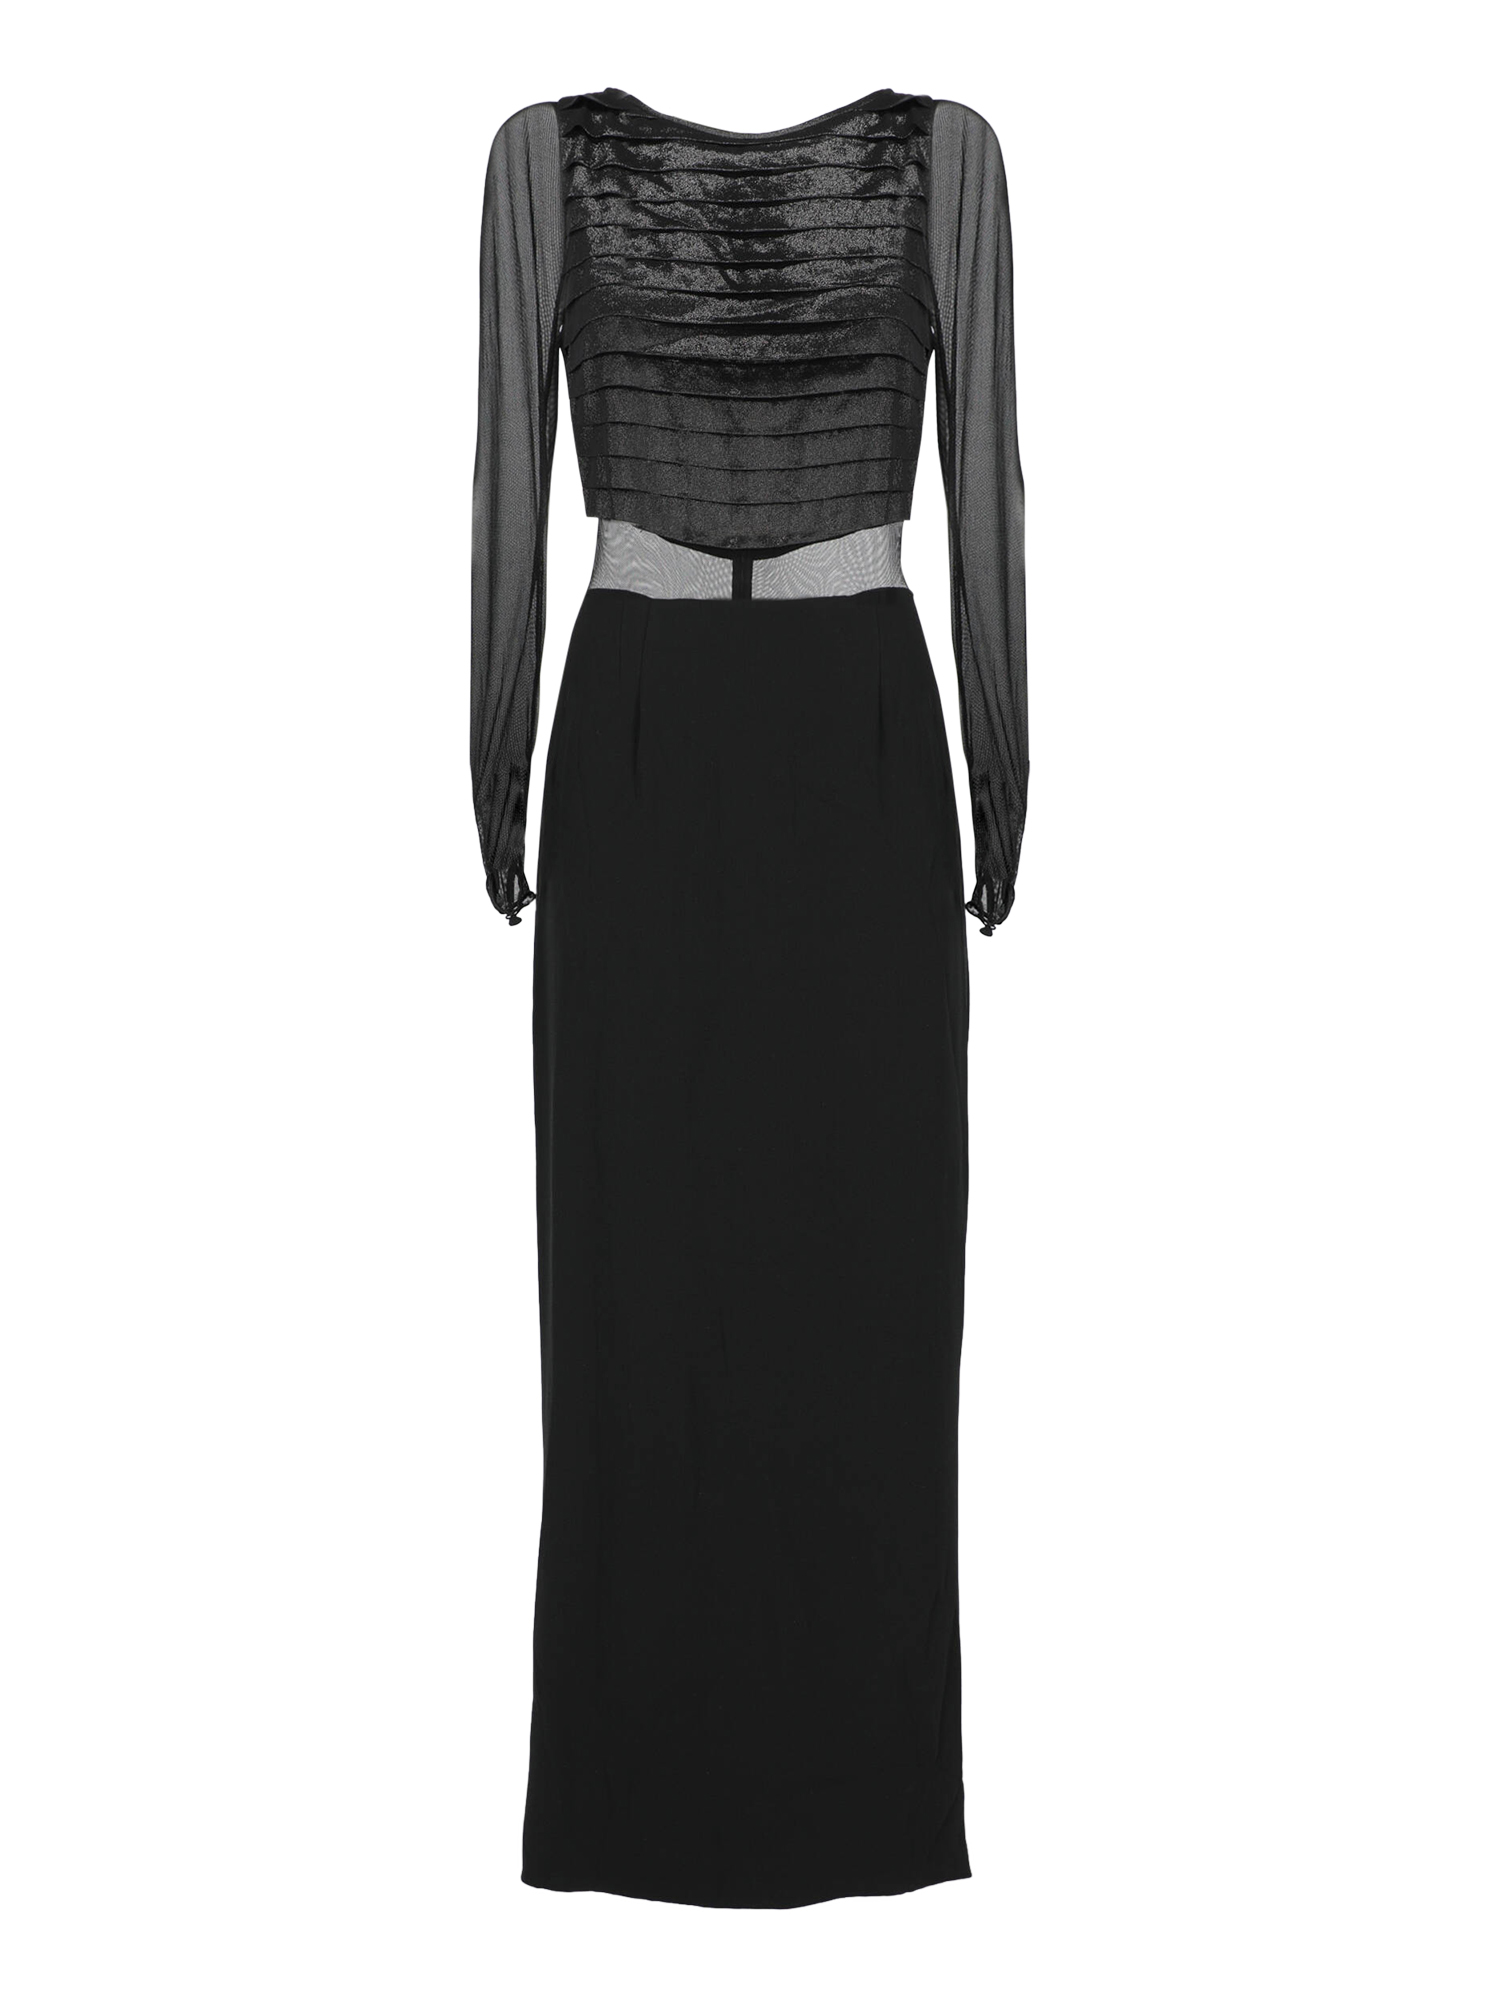 Robes Pour Femme - Vera Wang - En Synthetic Fibers Black - Taille:  -